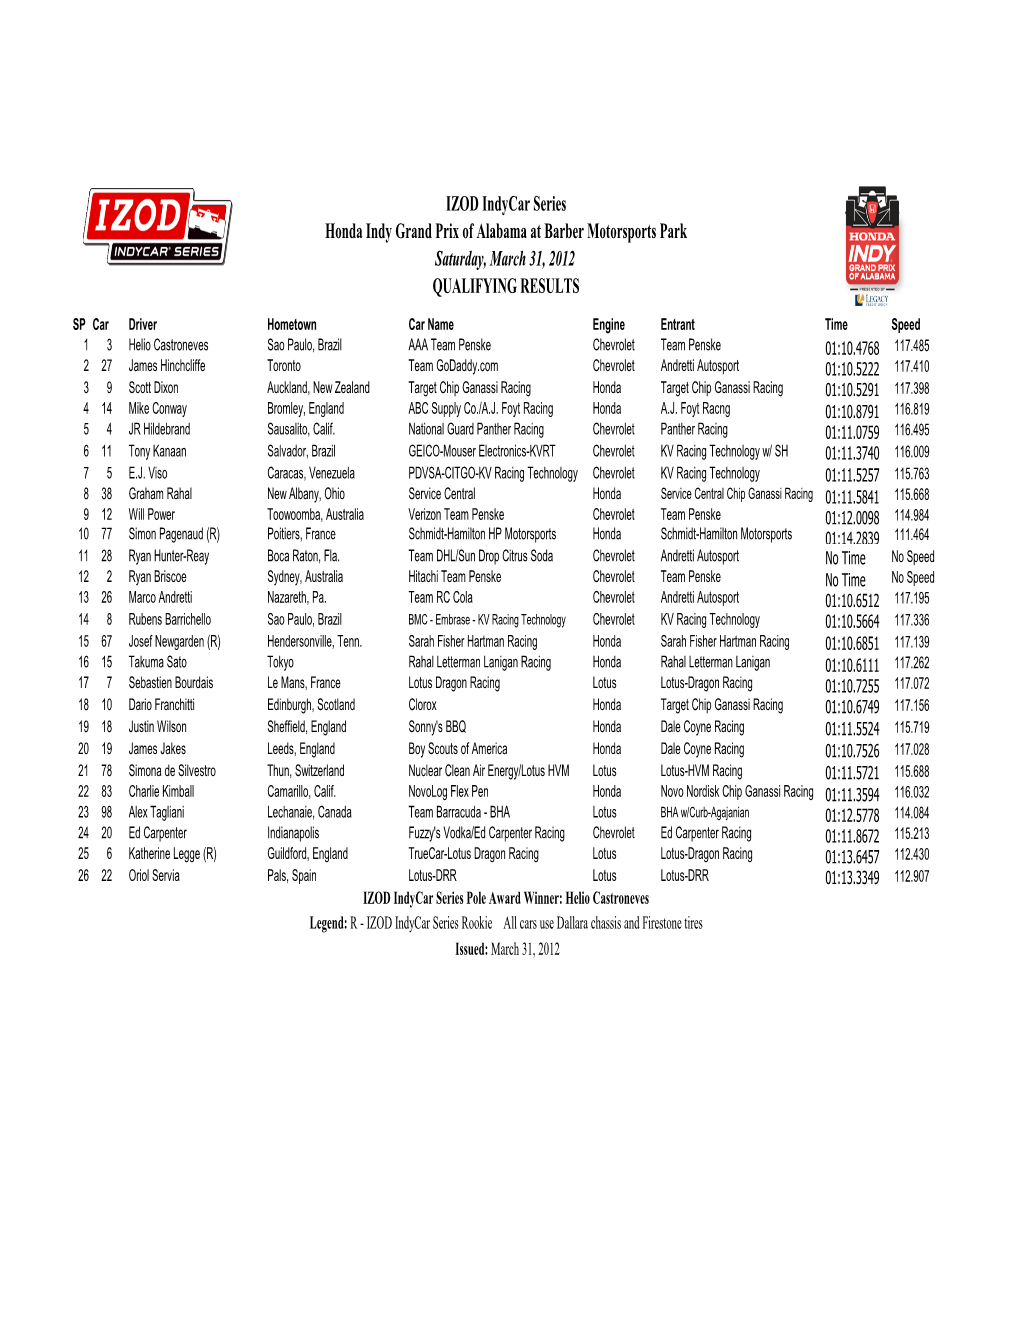 Copy of Official Honda Indy GP of Alabama Qual Results